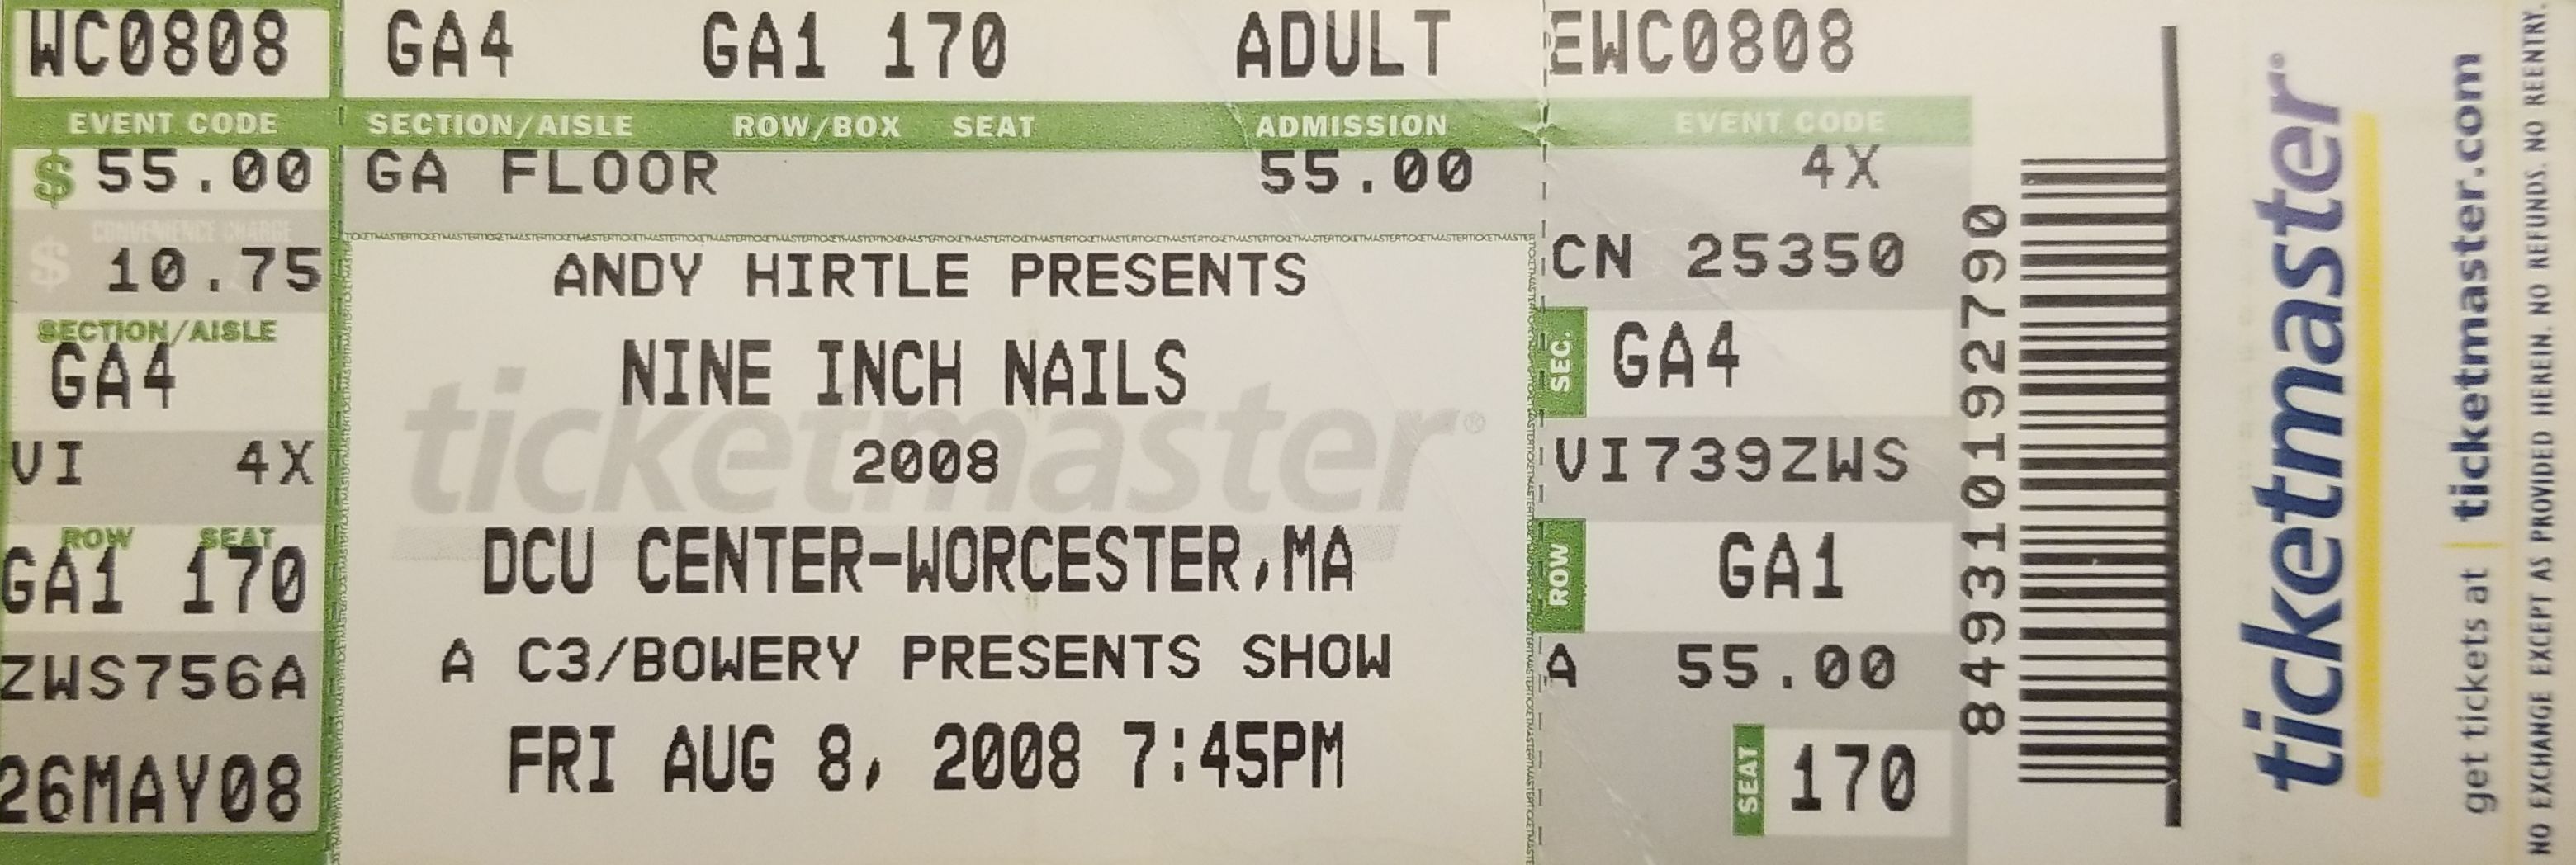 2008/11/09 Ticket